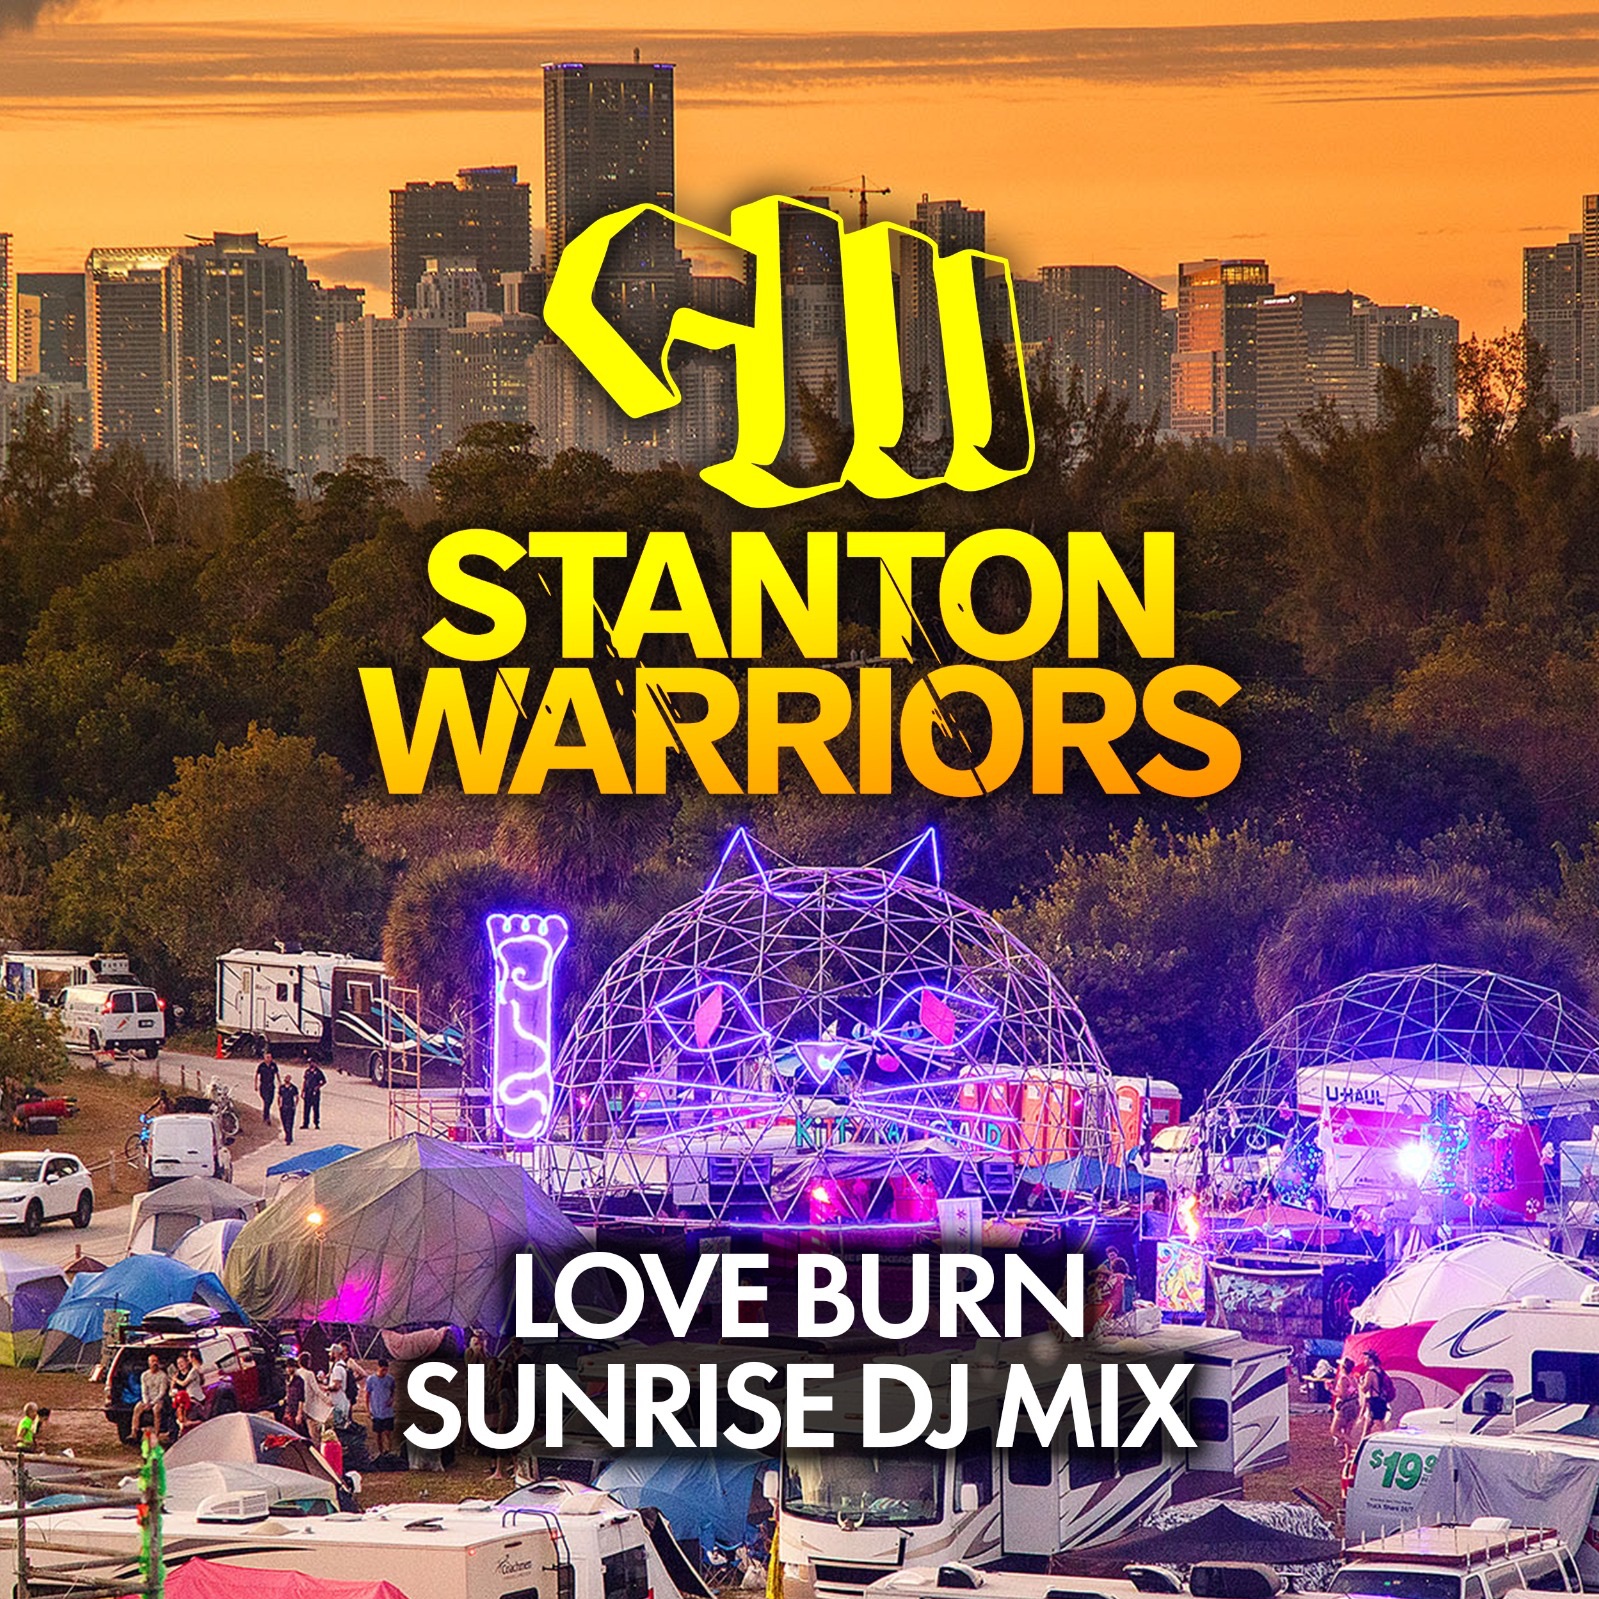 डाउनलोड करा Stanton Warriors - Loveburn Sunrise DJ Set